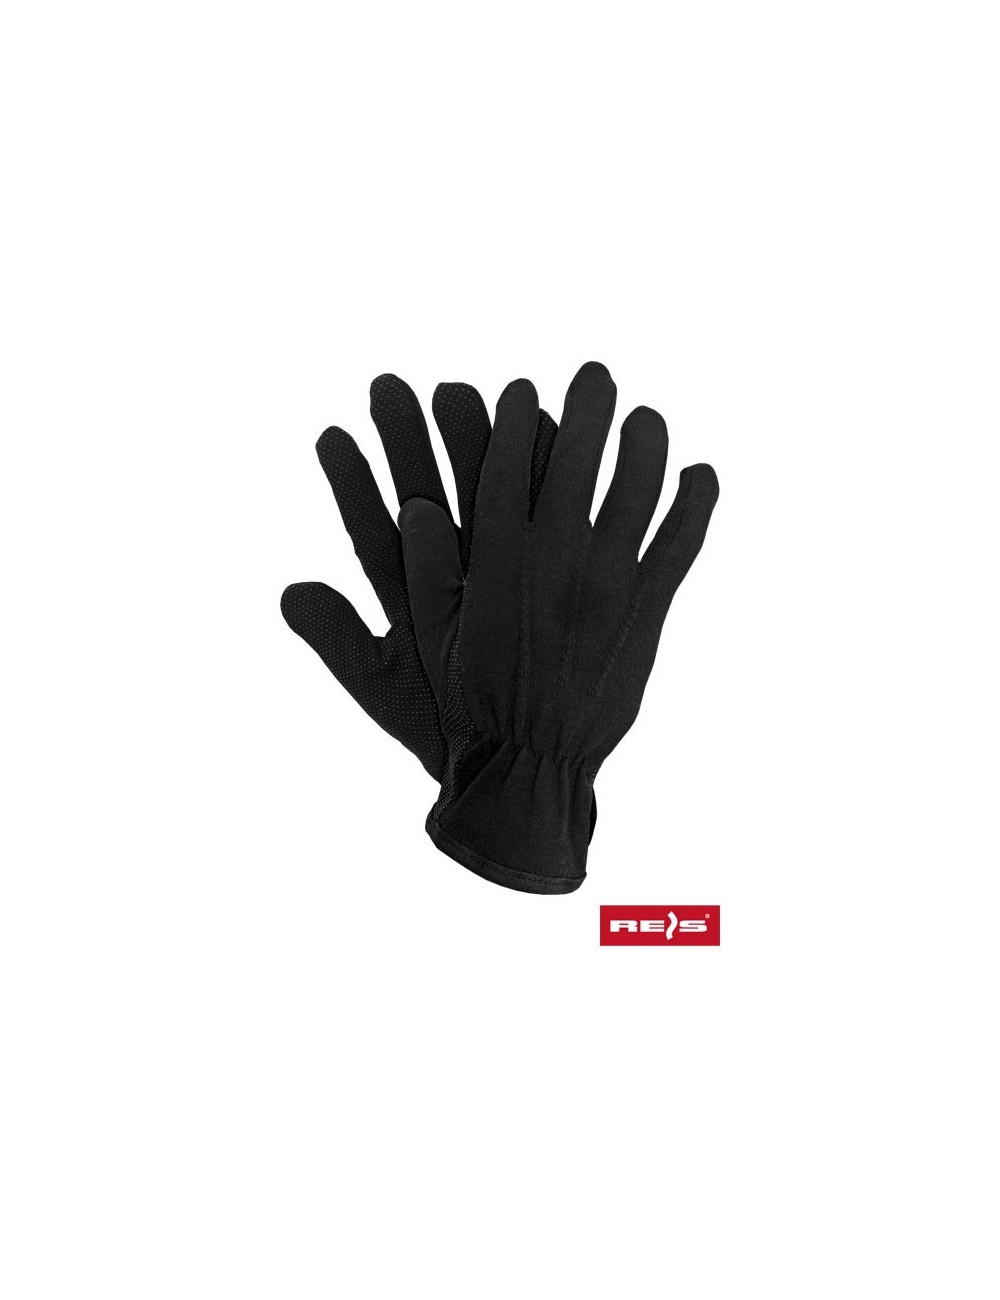 Protective gloves rmicron b black Reis